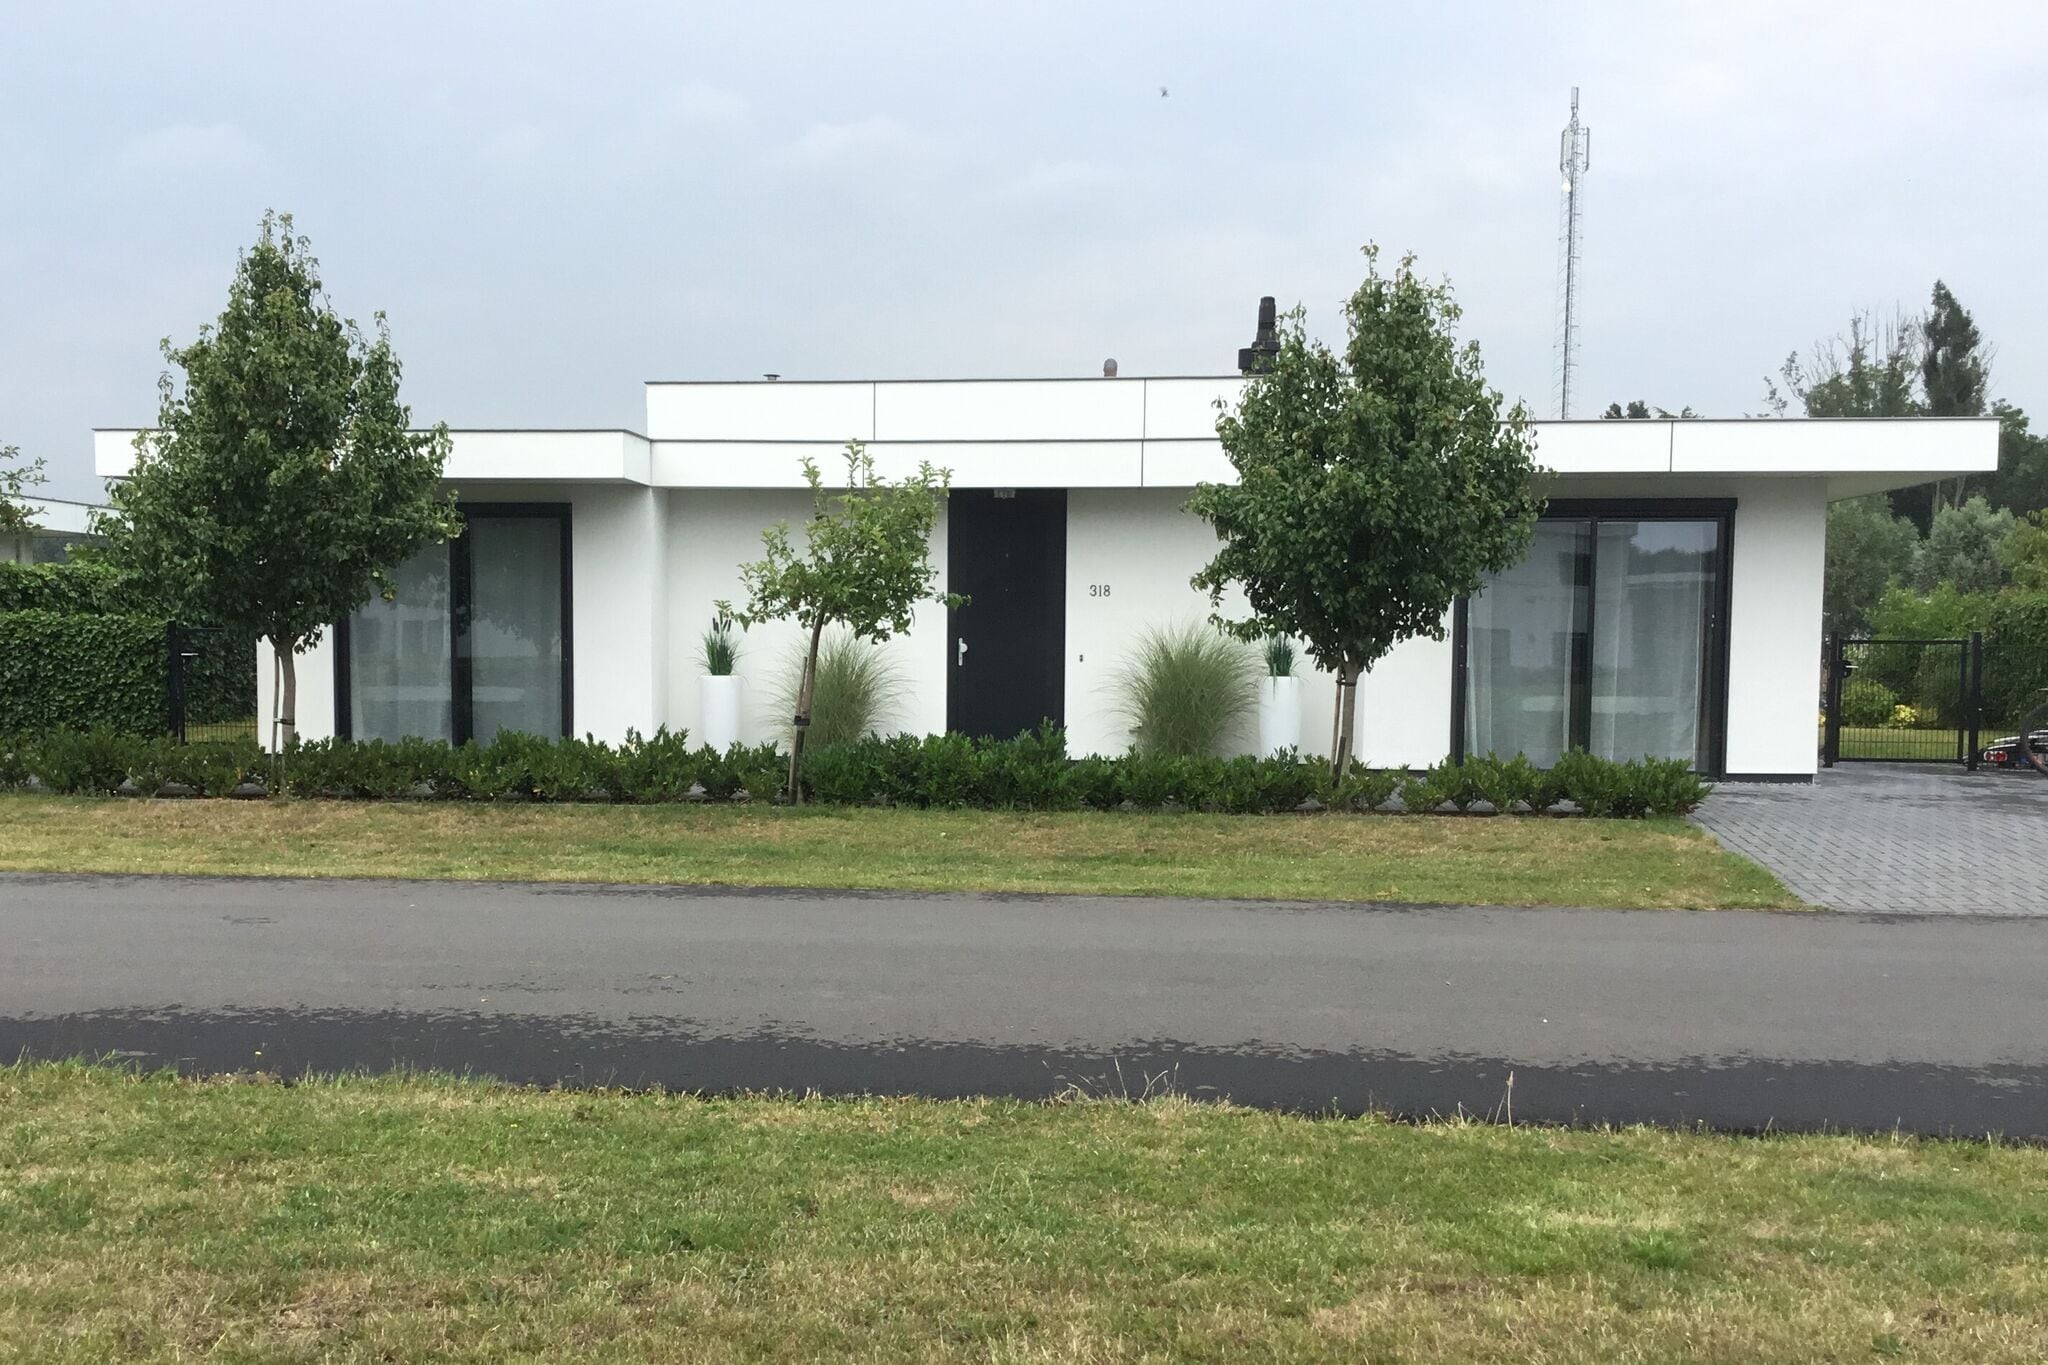 Villa moderne avec jardin à Harderwijk